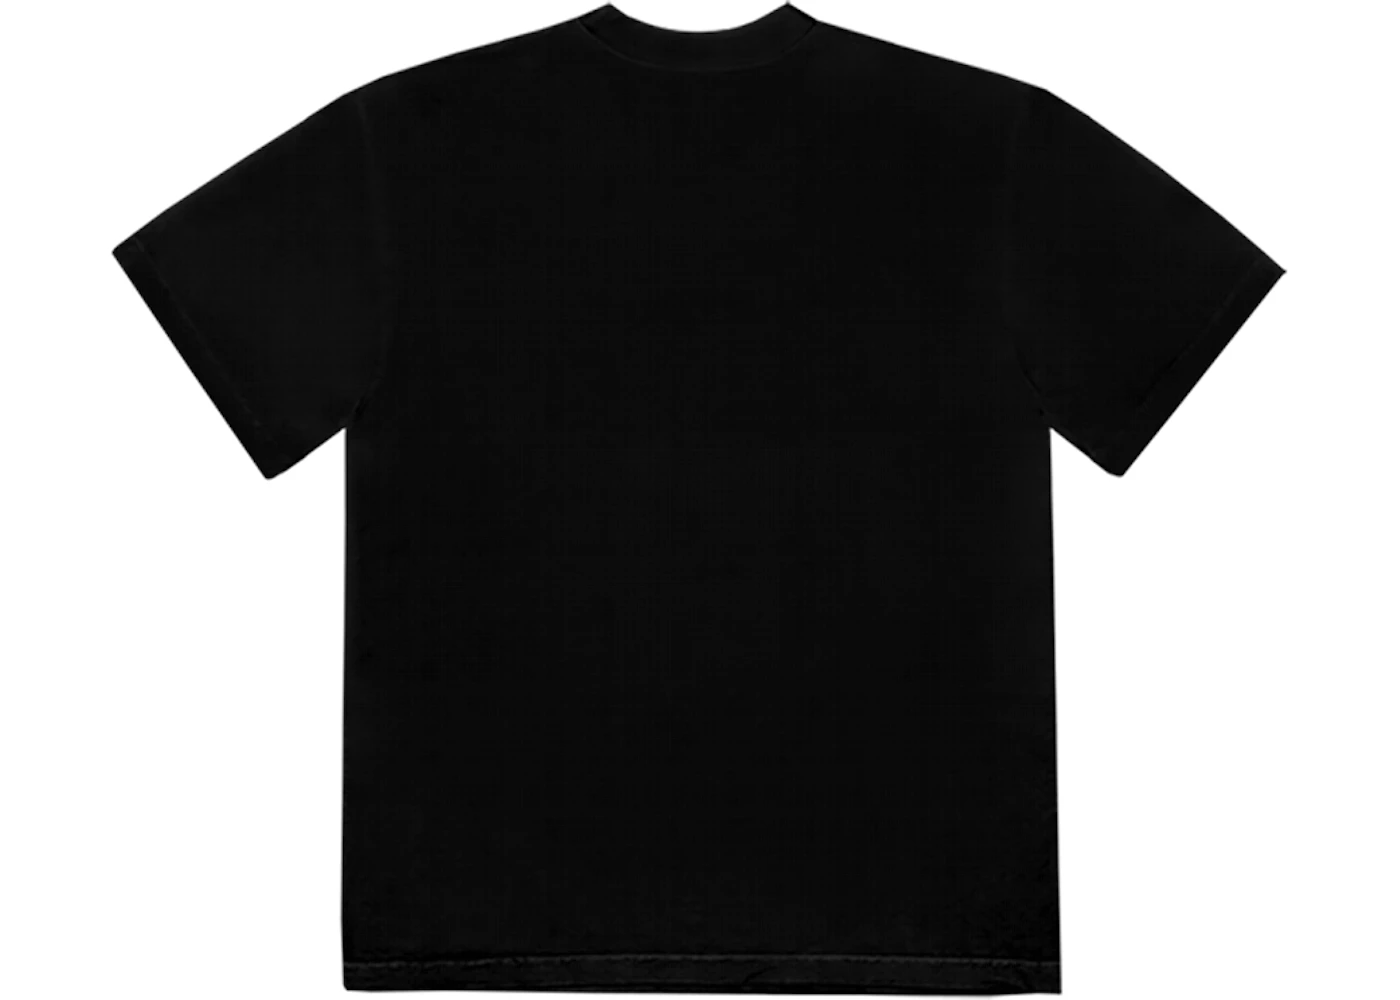 Stormzy Merky T-shirt Black - US